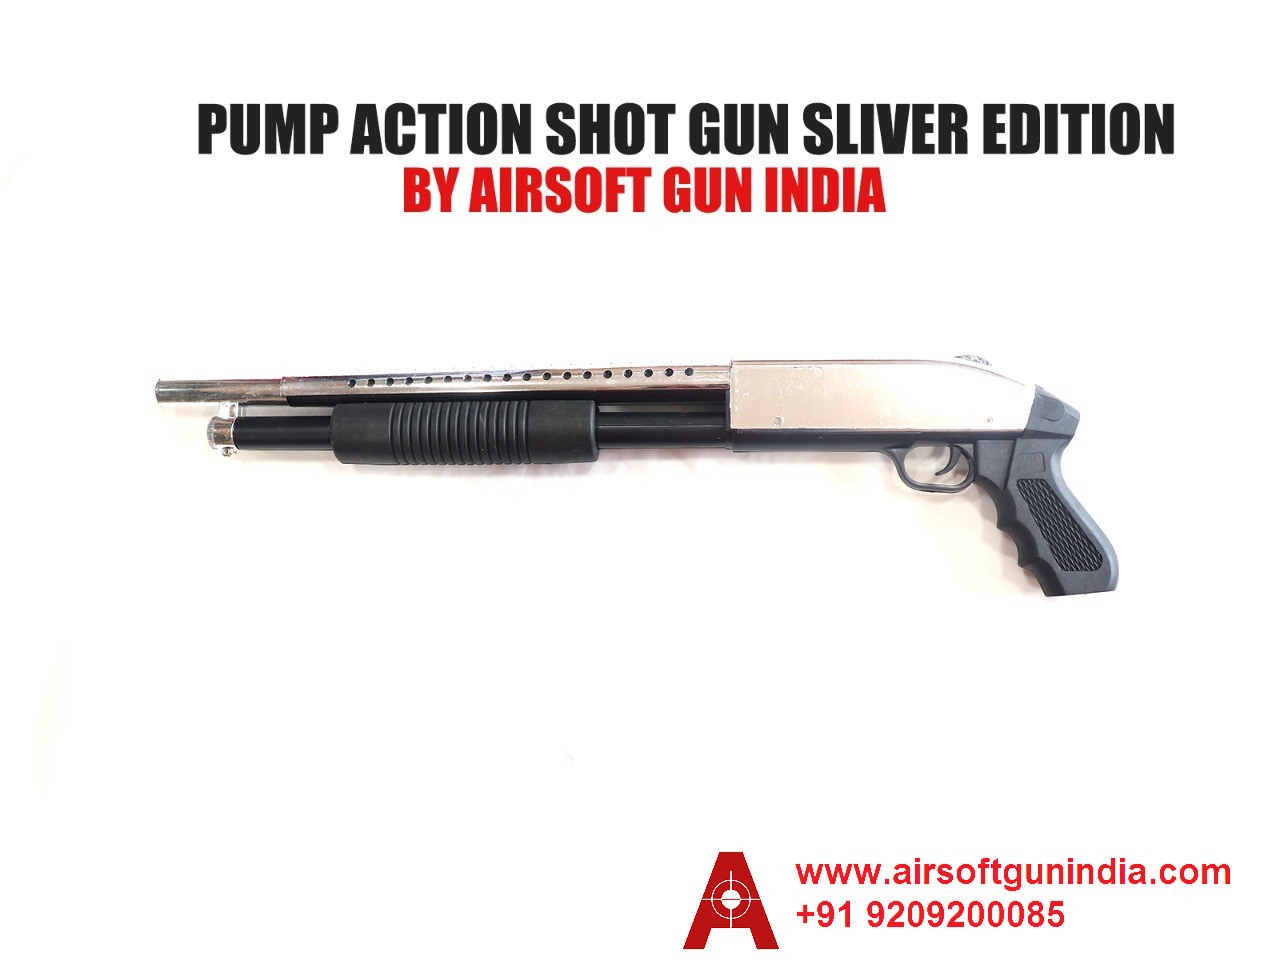 Pump Action Shot-Gun Silver Edition Airsoft Toy by Airsoft Gun India.